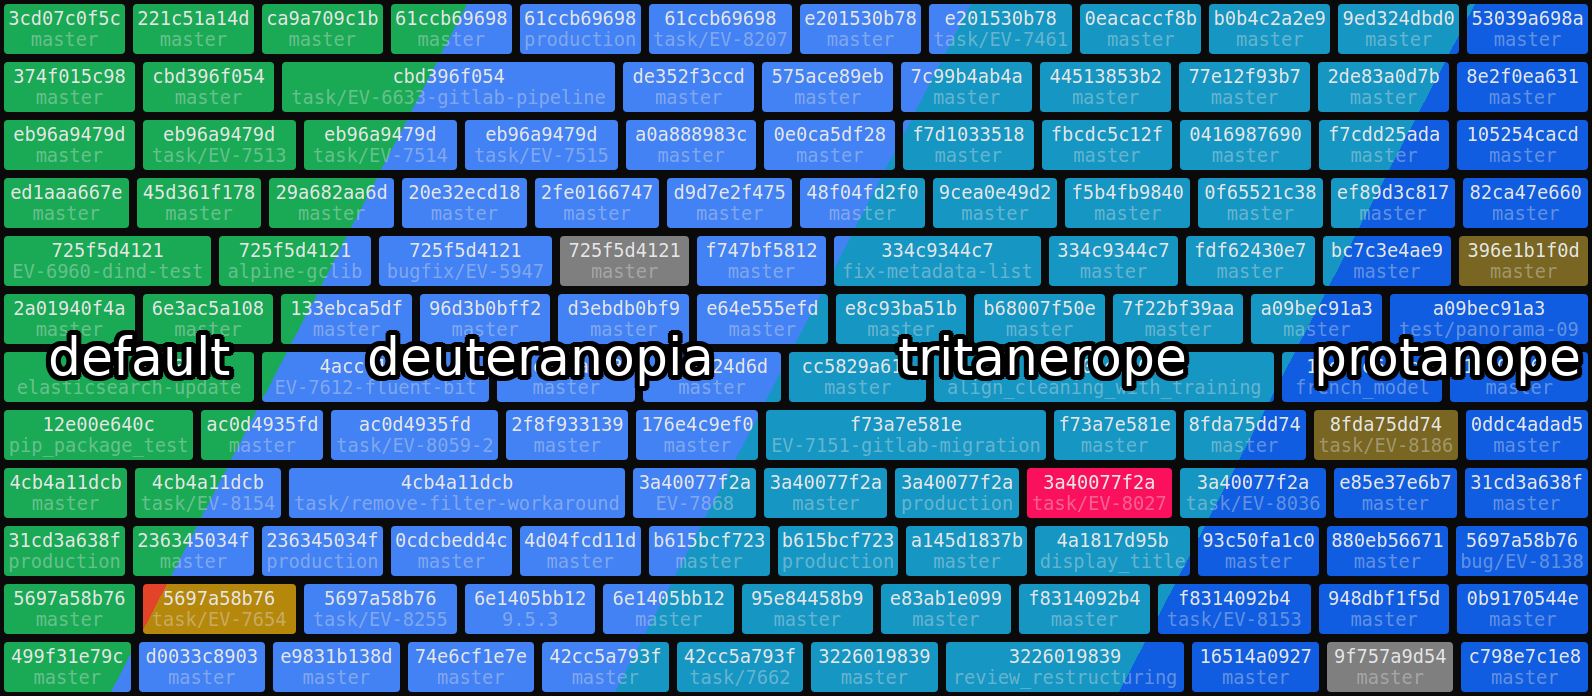 html screenshot default deuteranopia protanope tritanerope